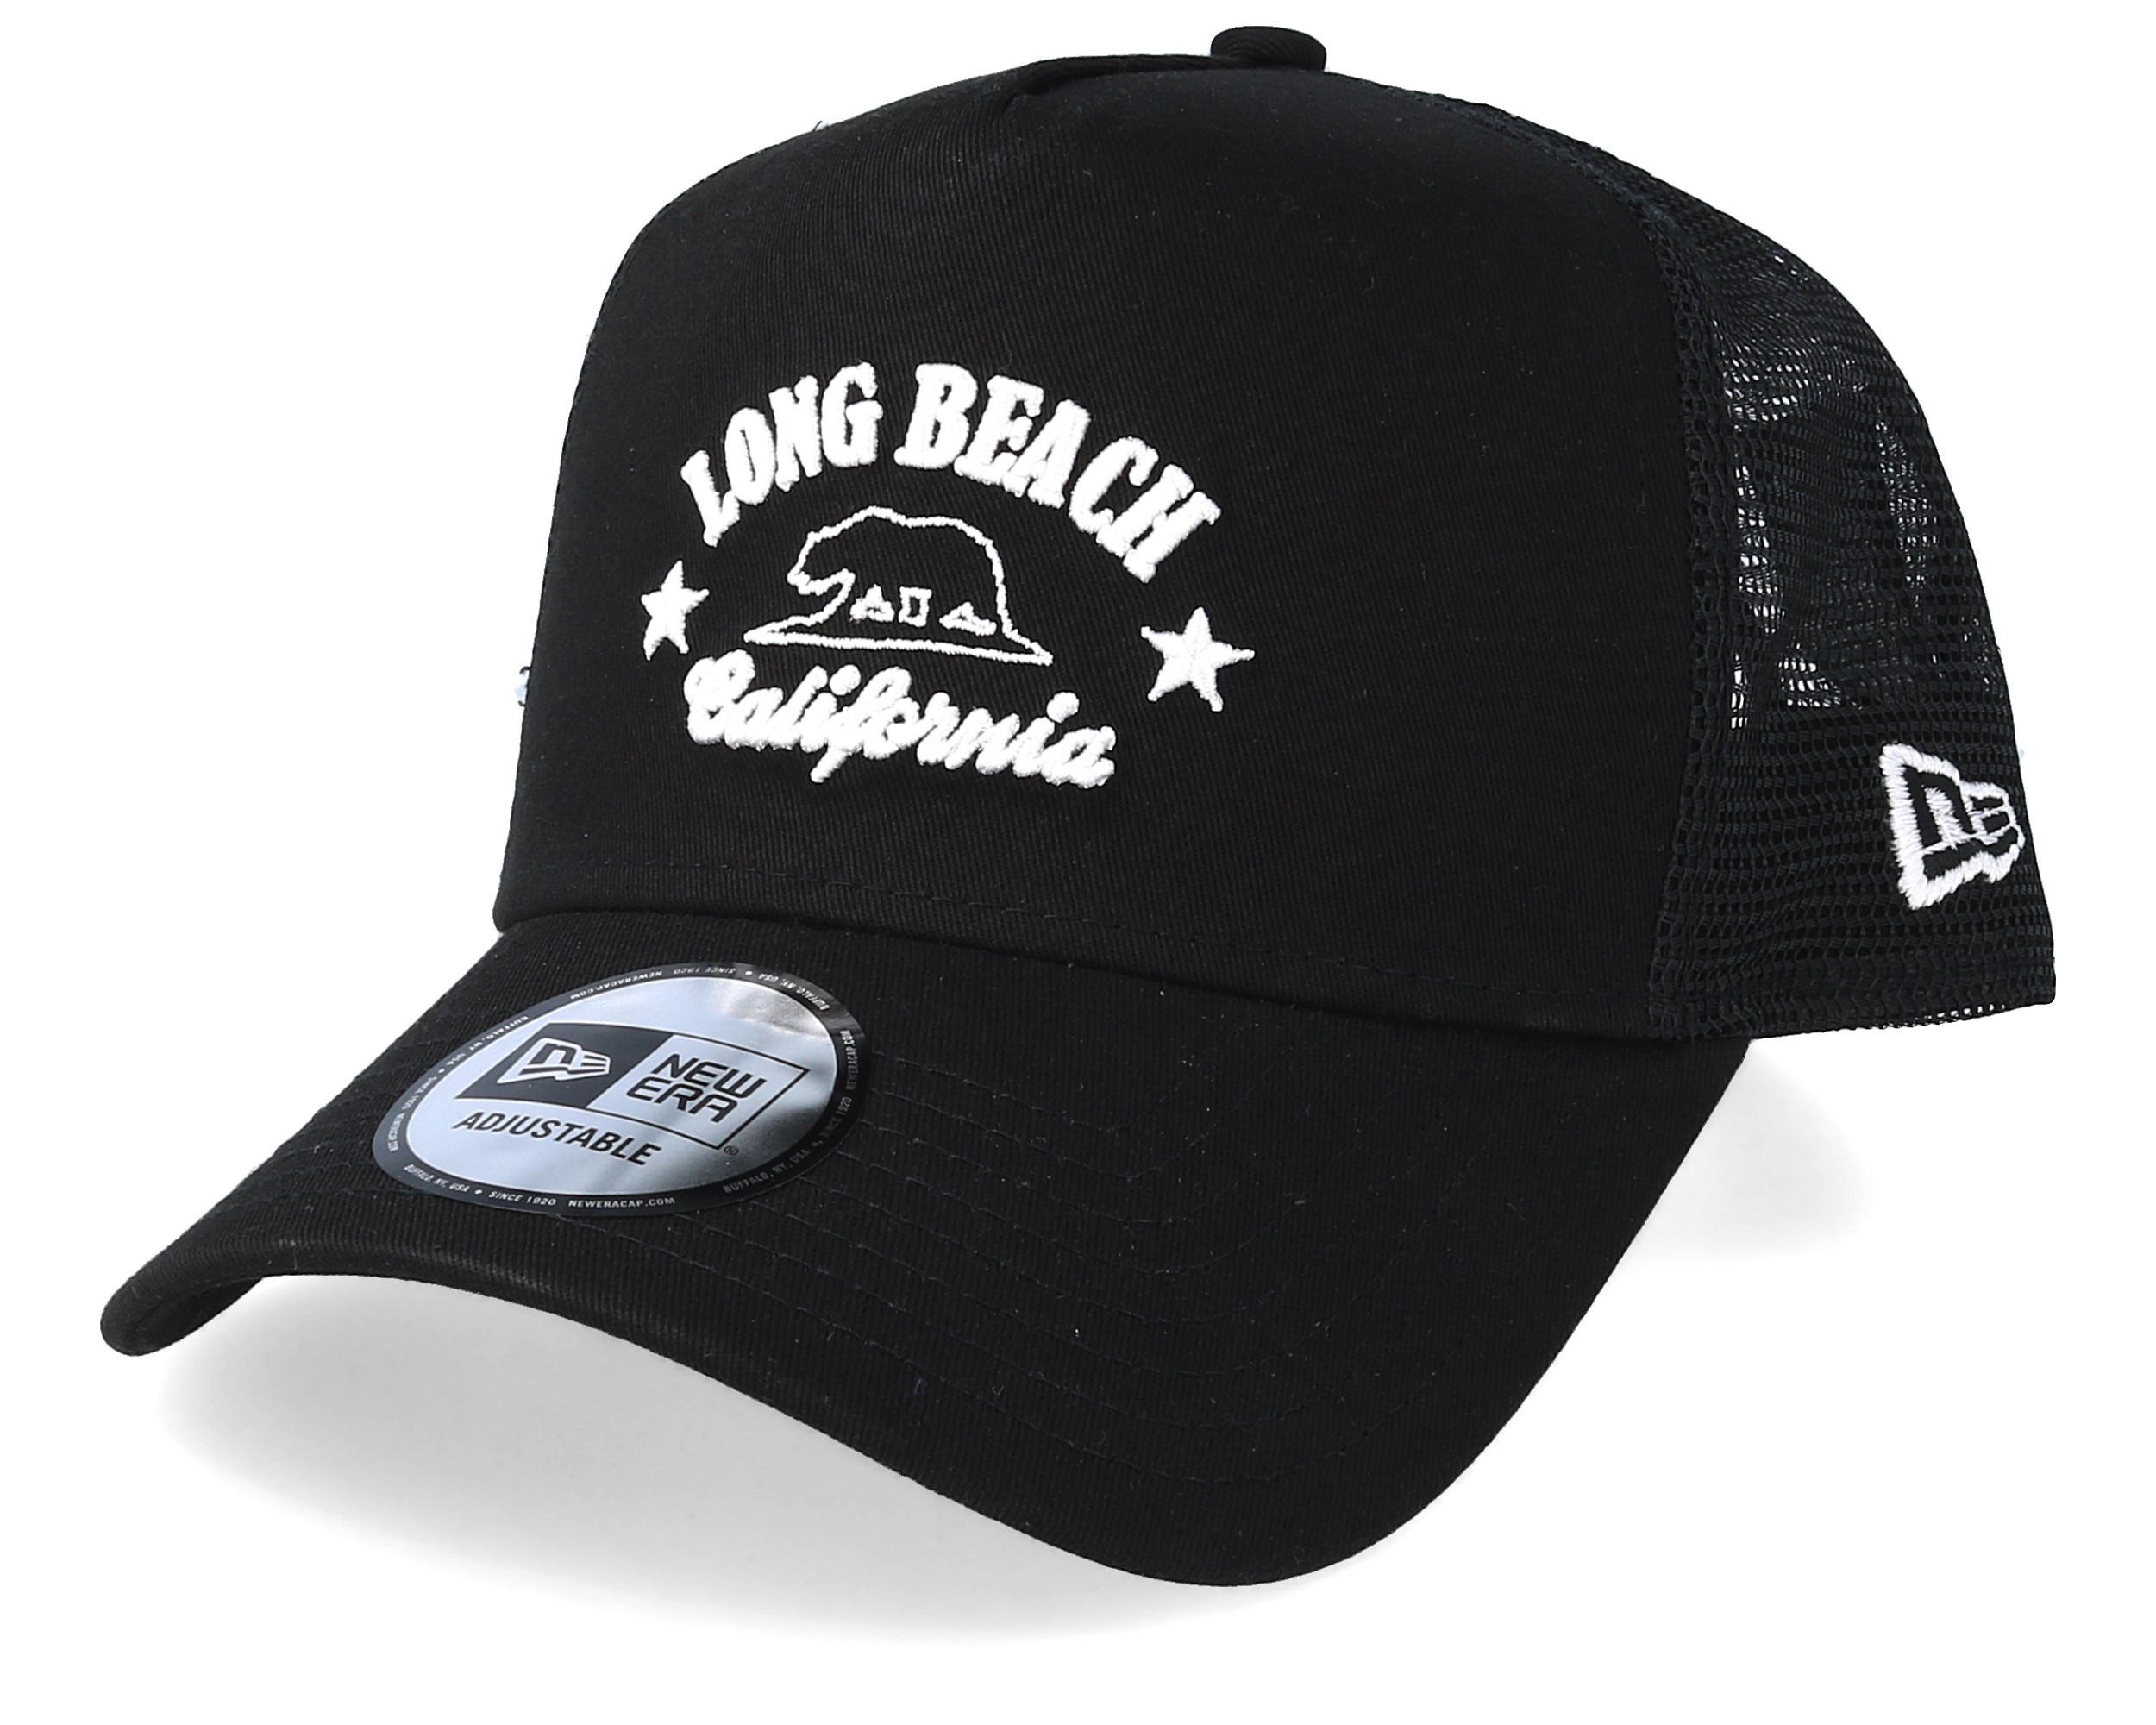 Long Beach California Black Trucker - New Era cap